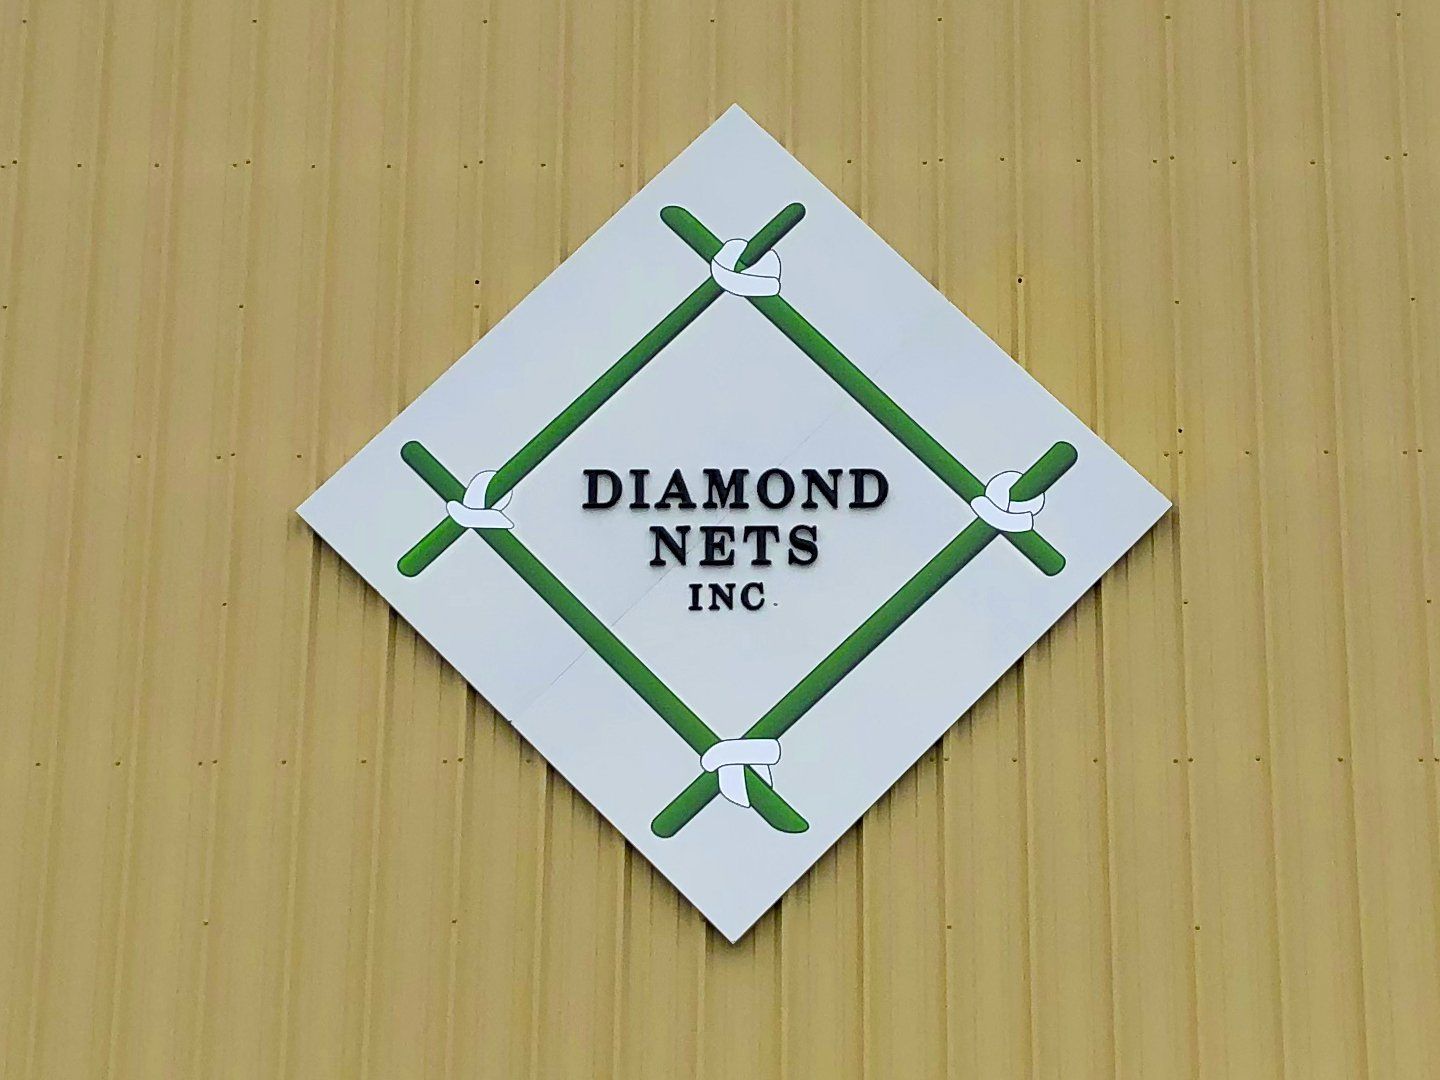 diamond nets building sign